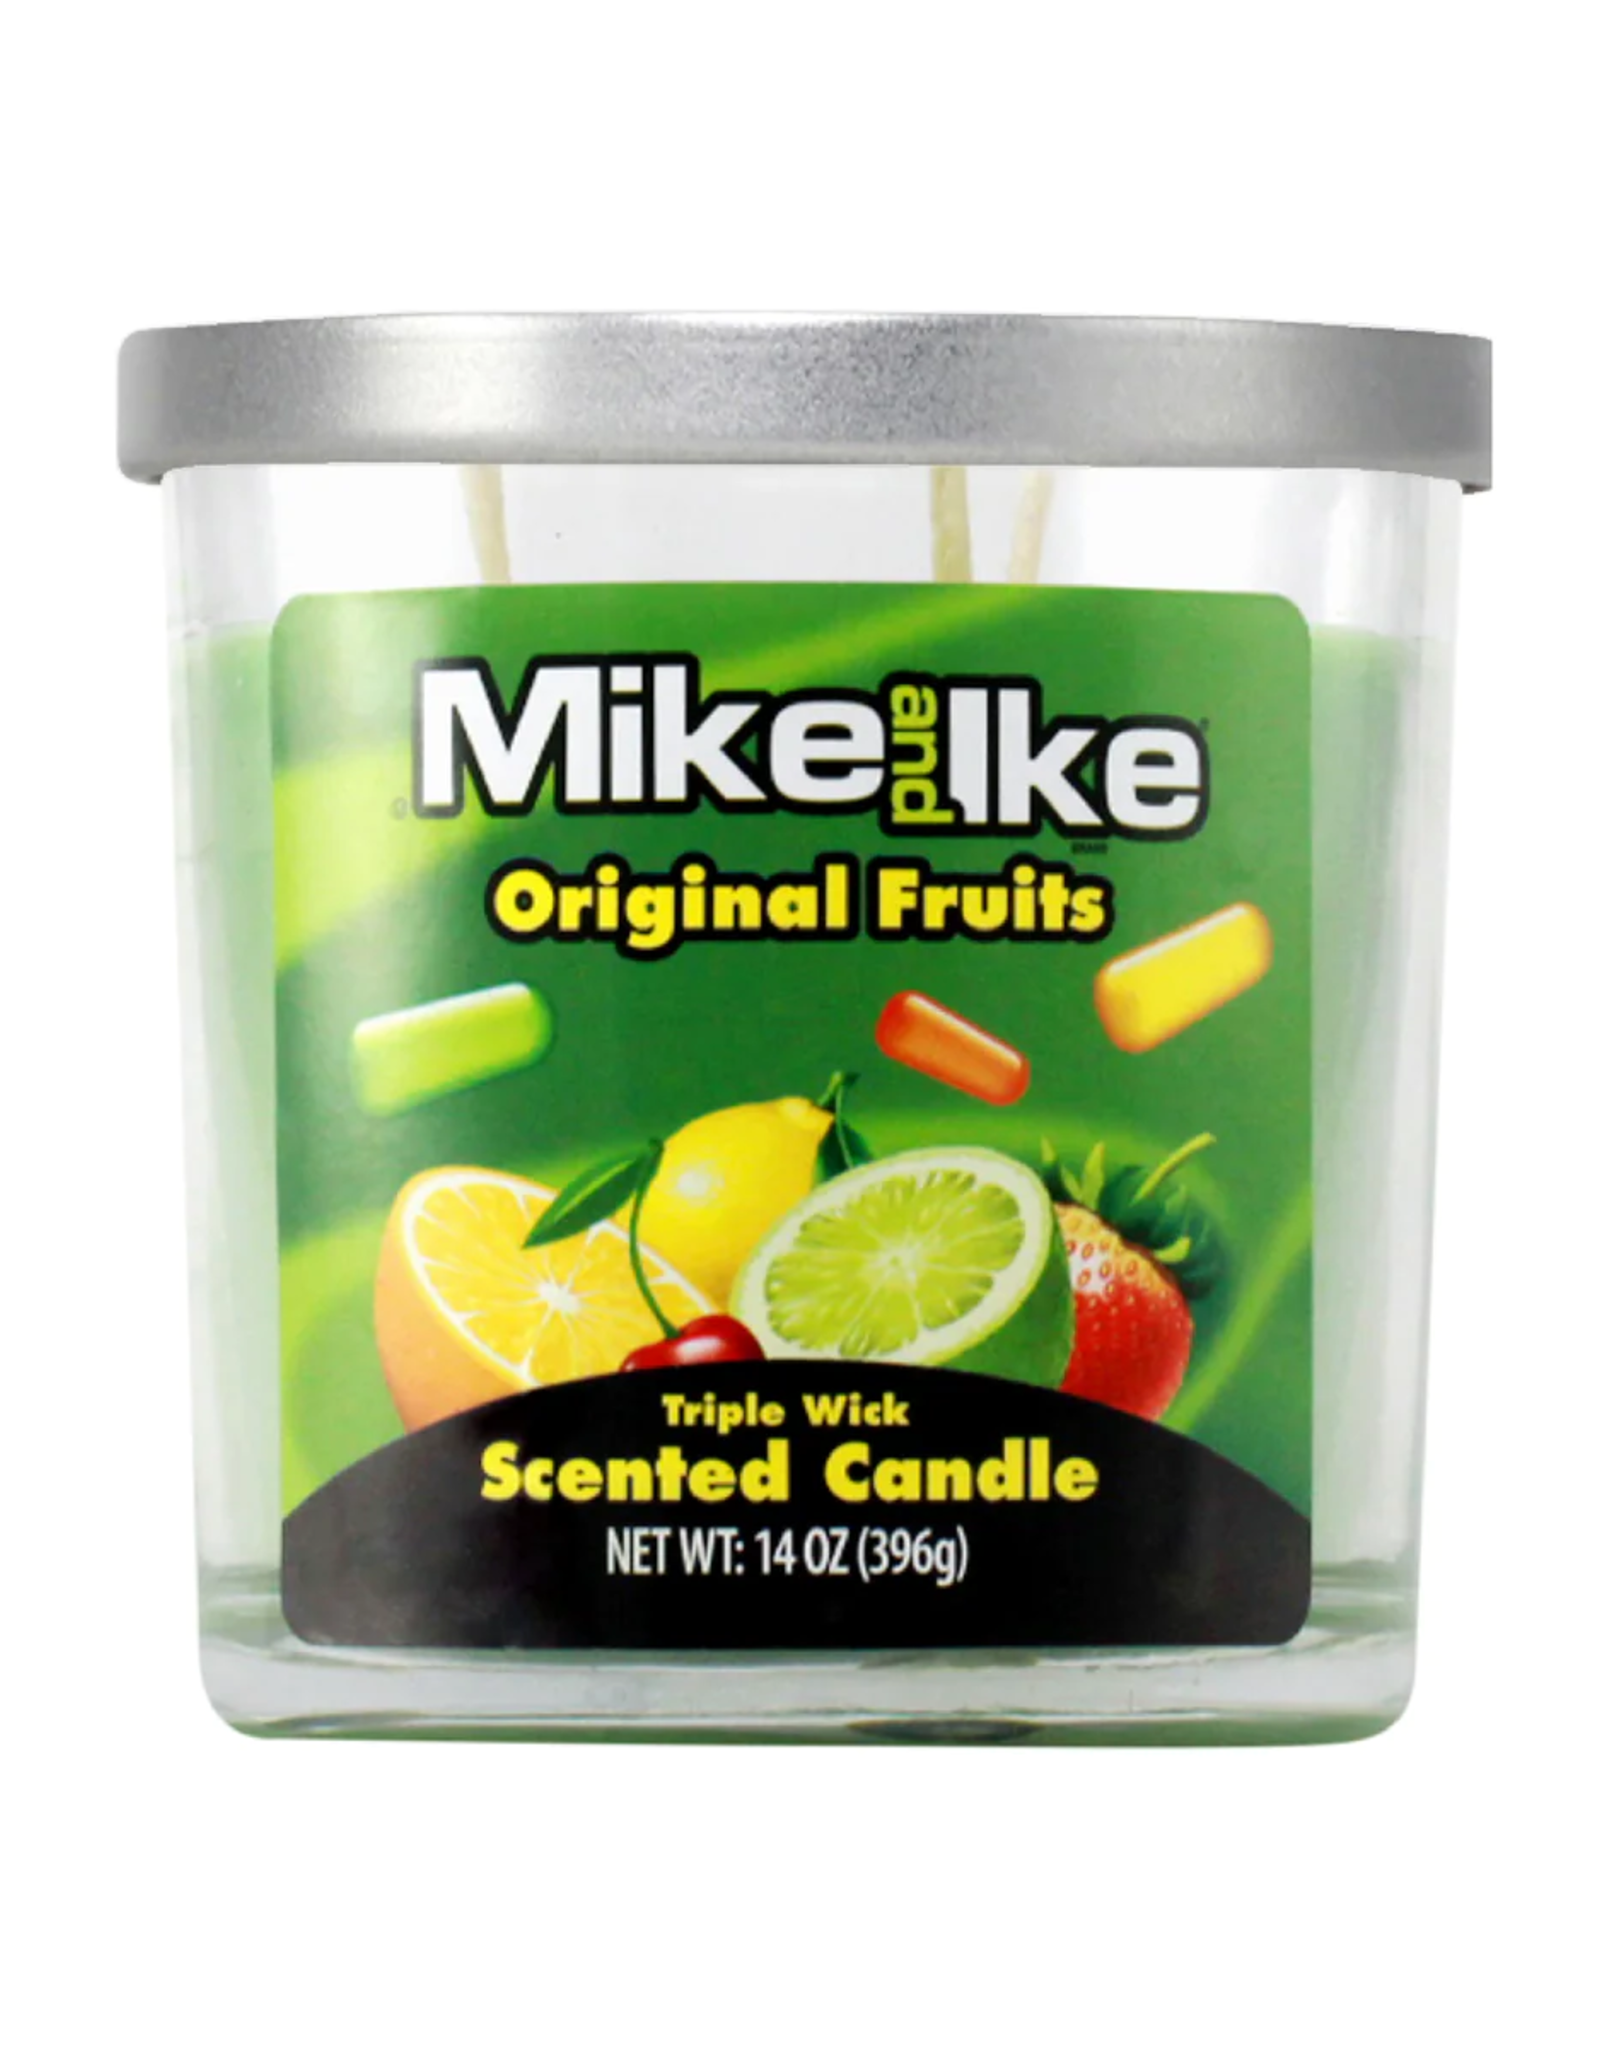 Mike & Ike Original Fruits Sweet Tooth Candle - 14oz